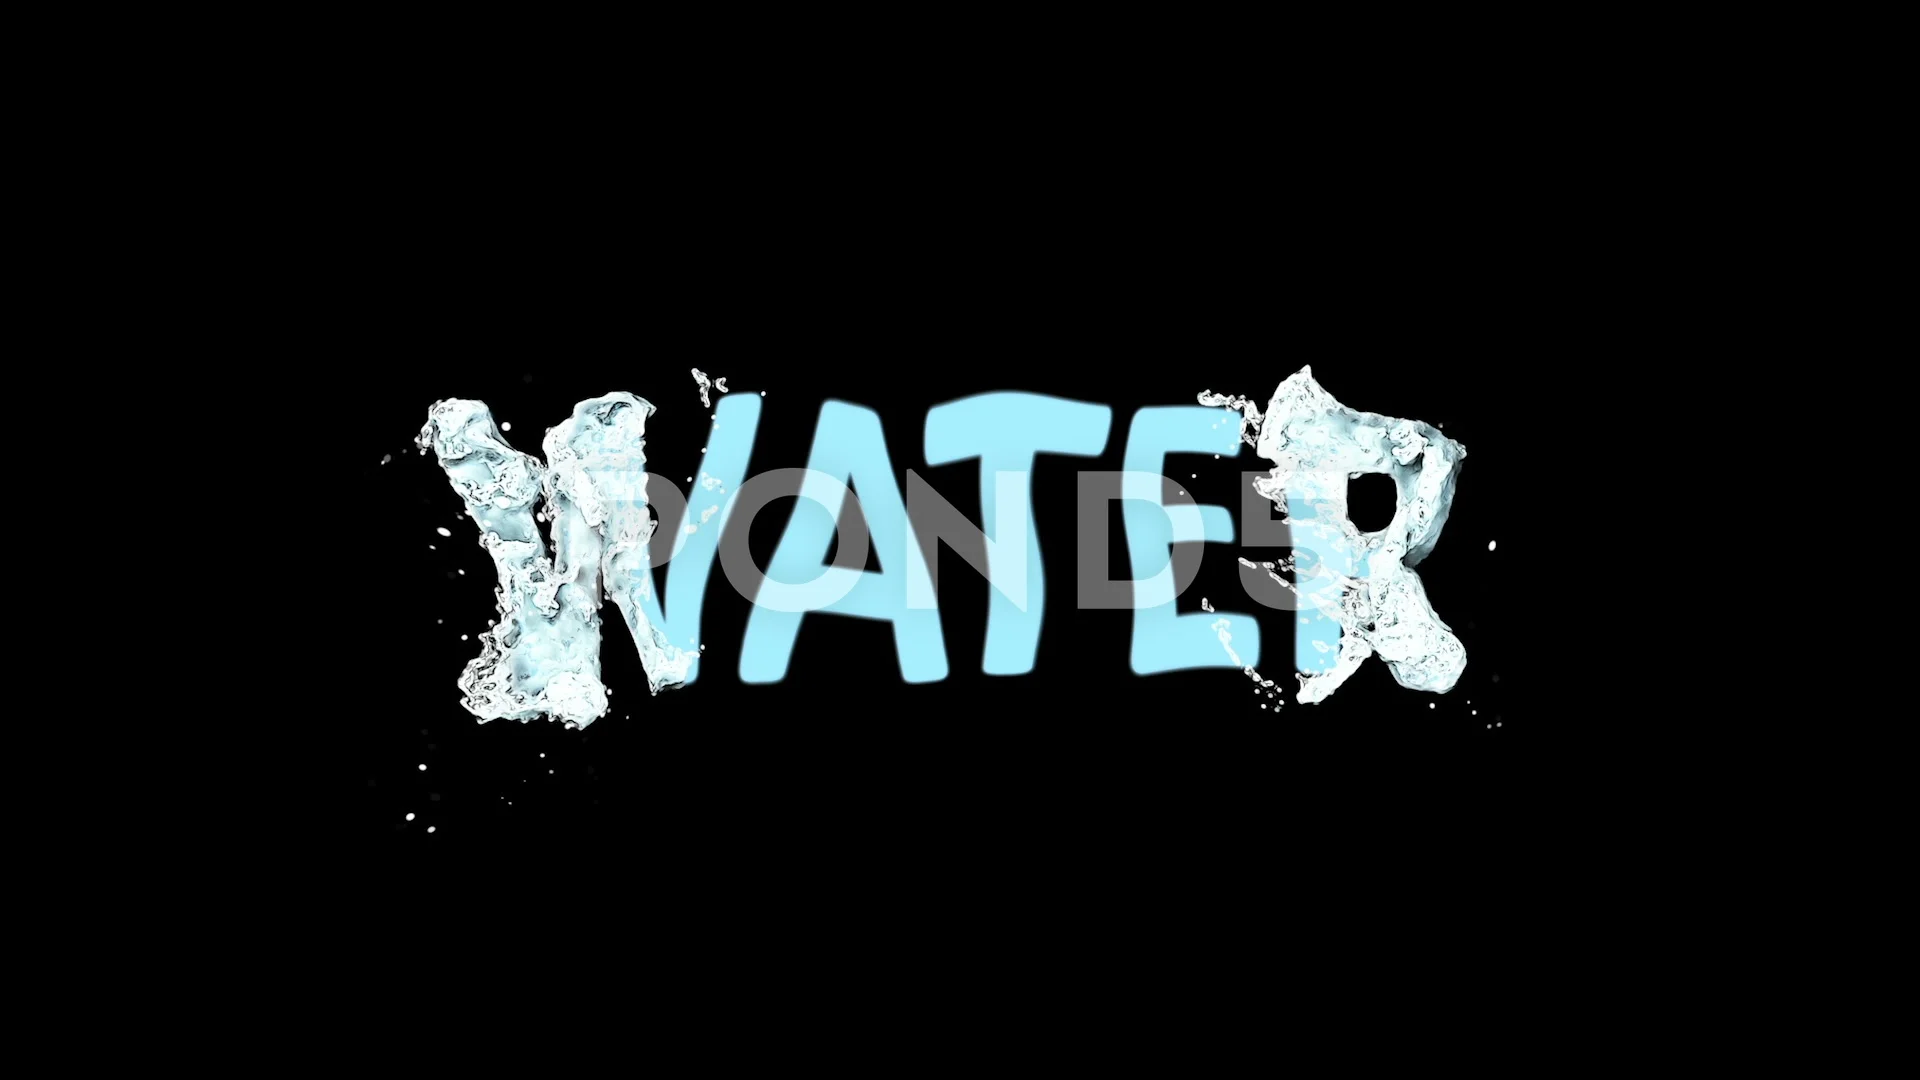 Water Spray Animation Stock Footage ~ Royalty Free Stock Videos | Pond5